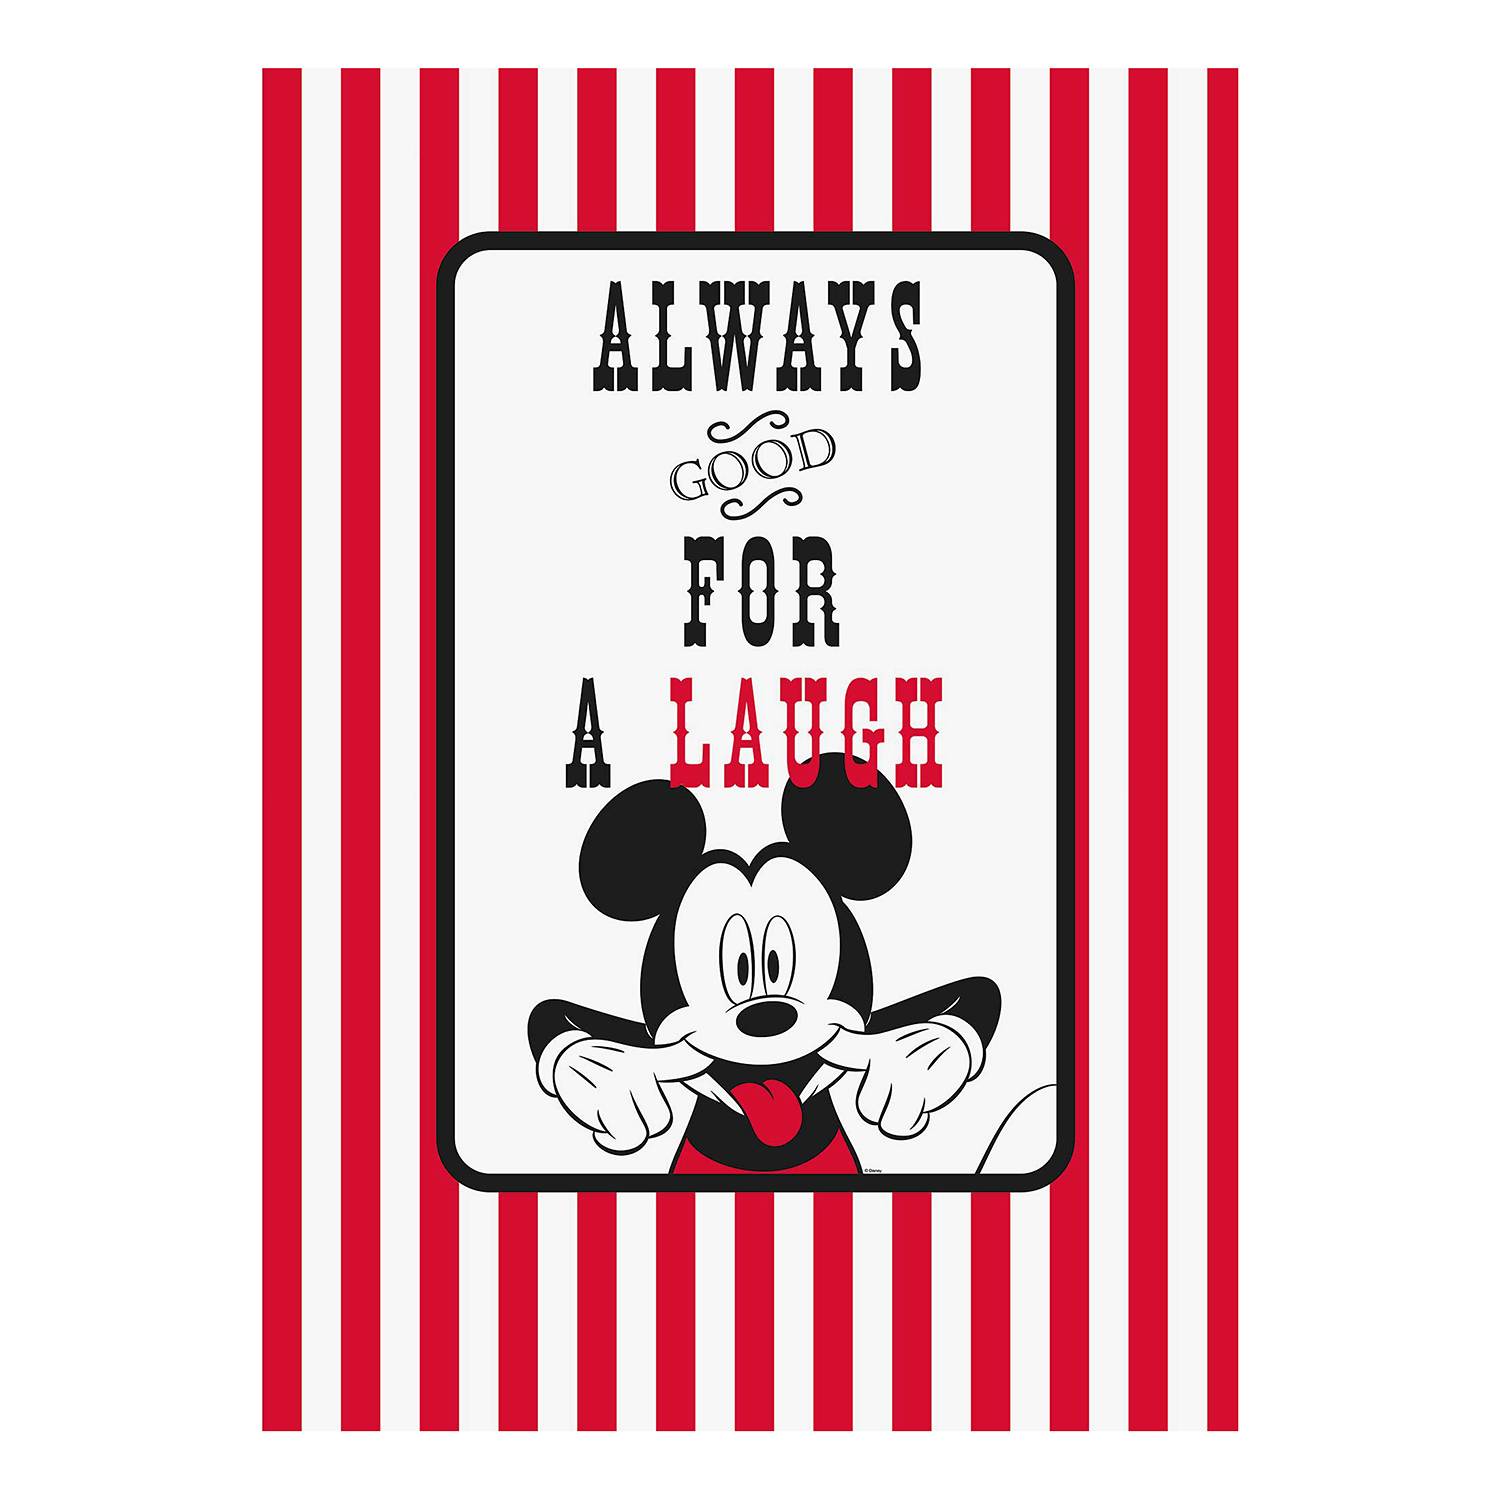 Wandbild home24 Laugh | Mickey Mouse kaufen